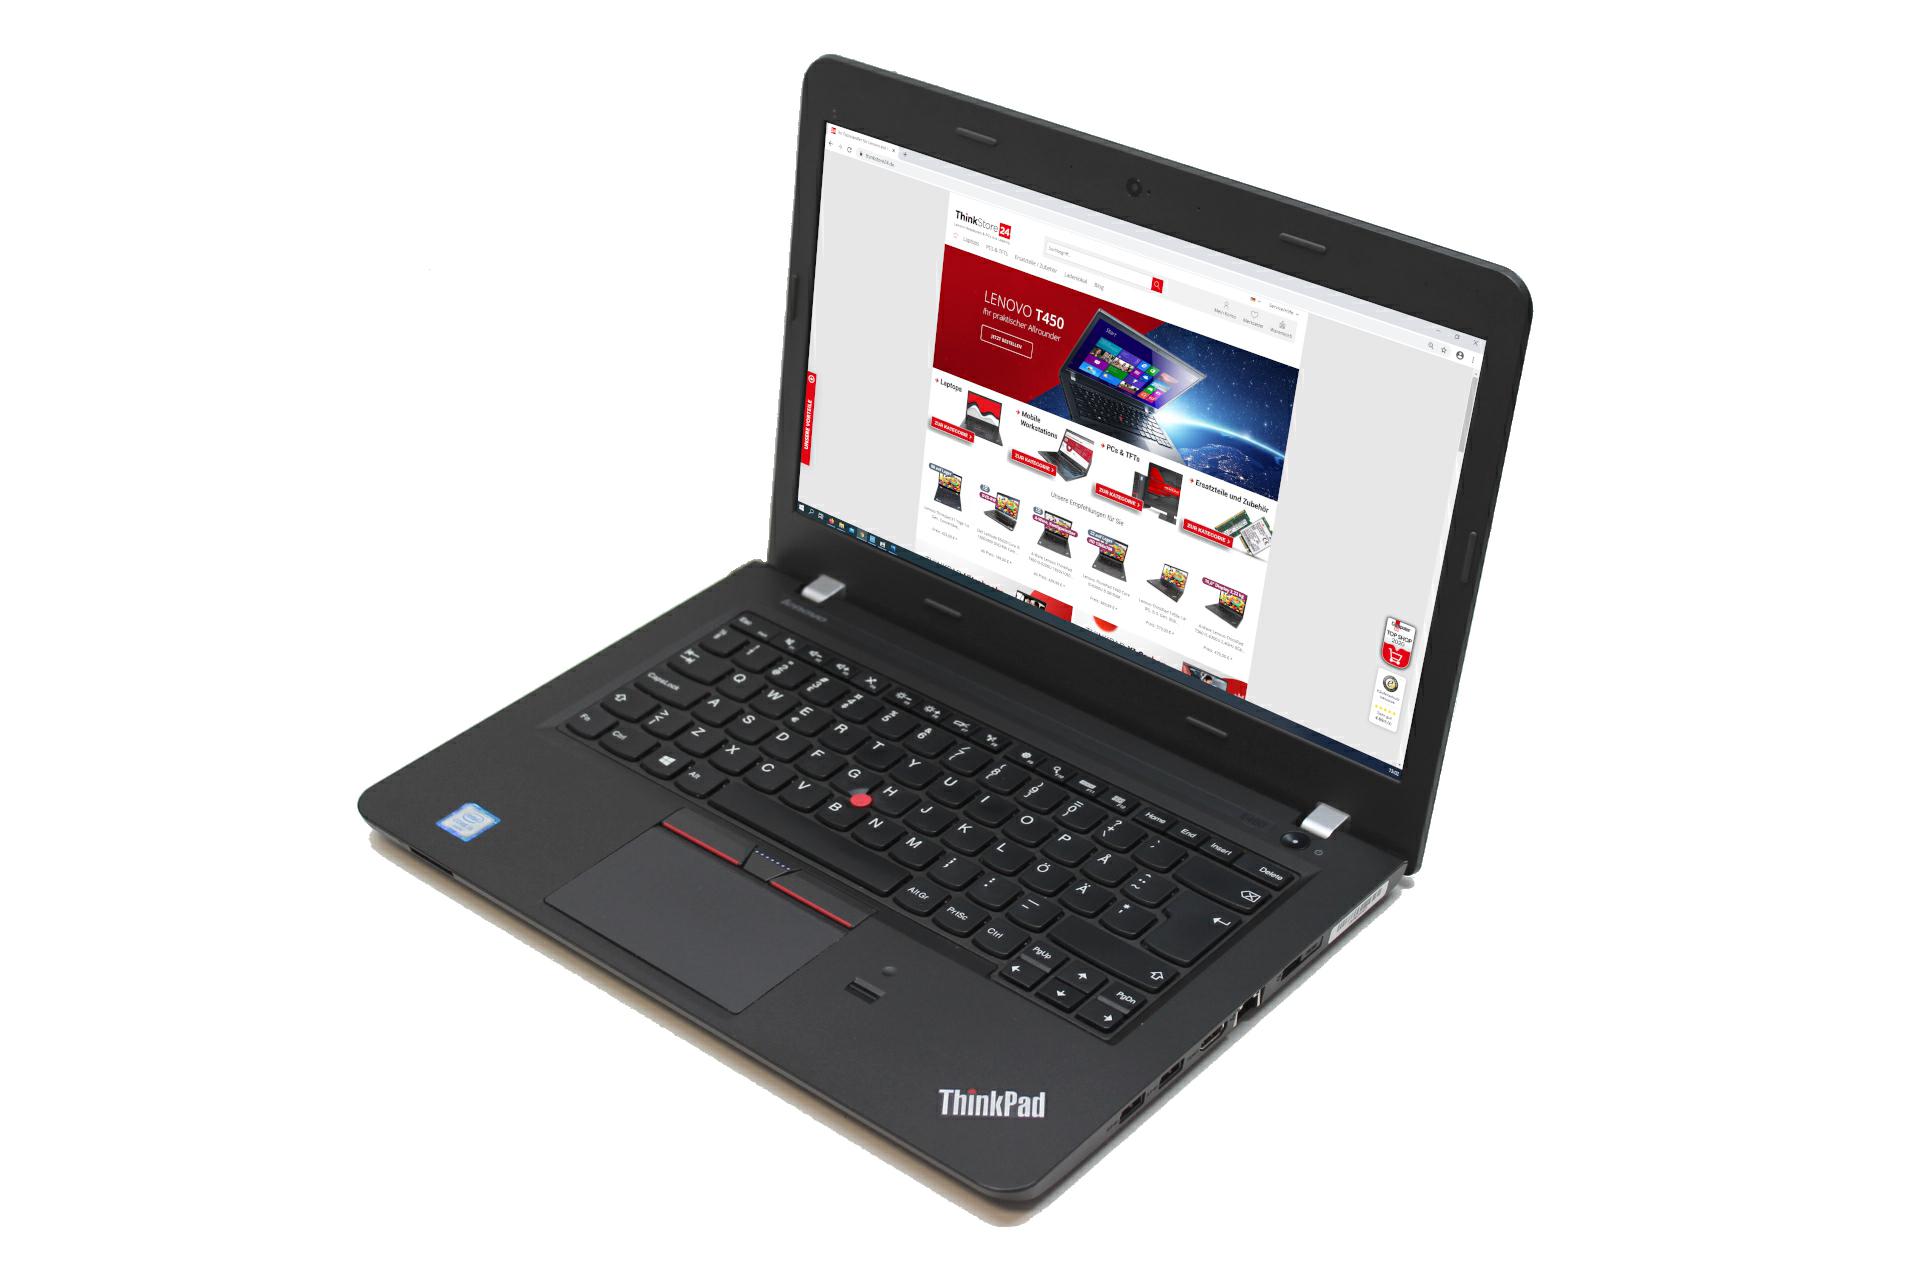 Lenovo ThinkPad E460 i5-6200U 2,3GHz 8GB RAM 192GB SSD FullHD IPS 14